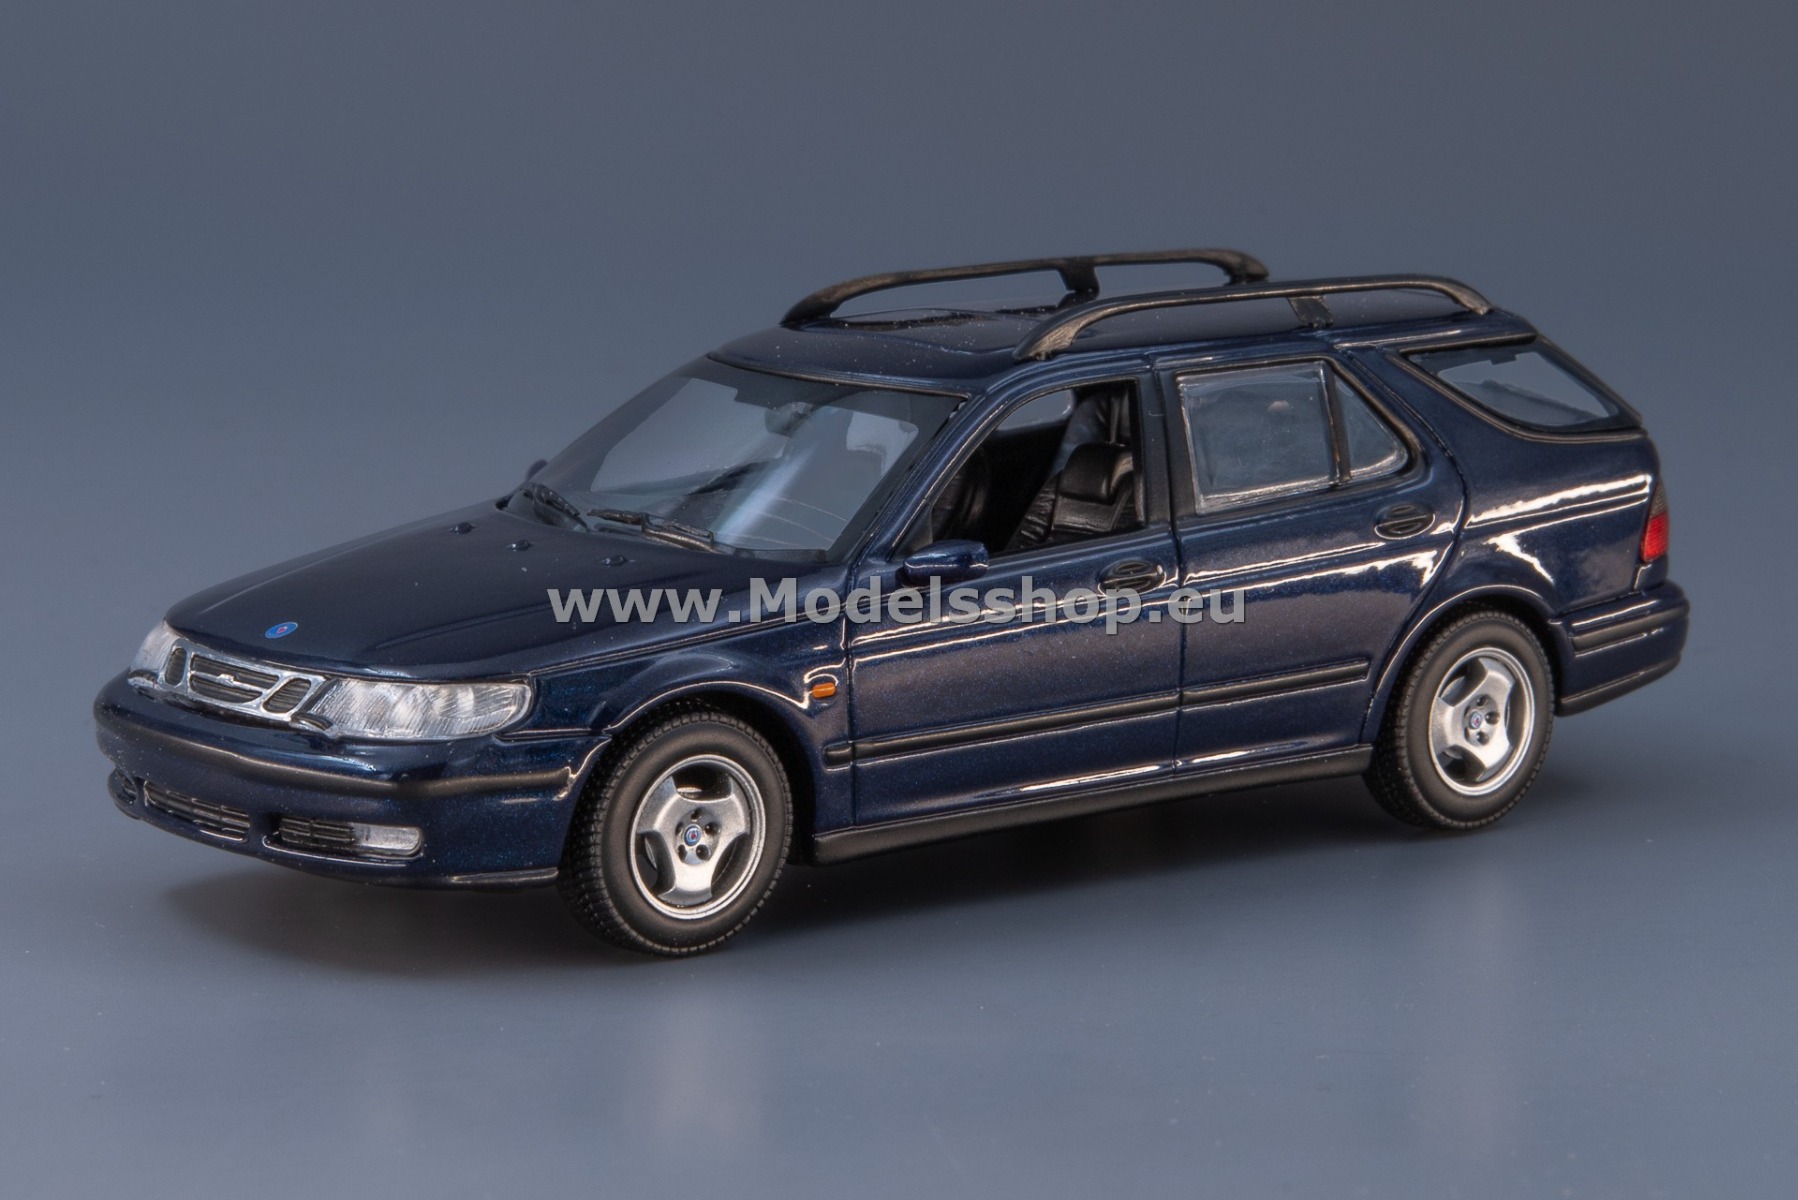 Maxichamps 940170810 Saab 9-5 Break, 1999 /dark blue metallic/